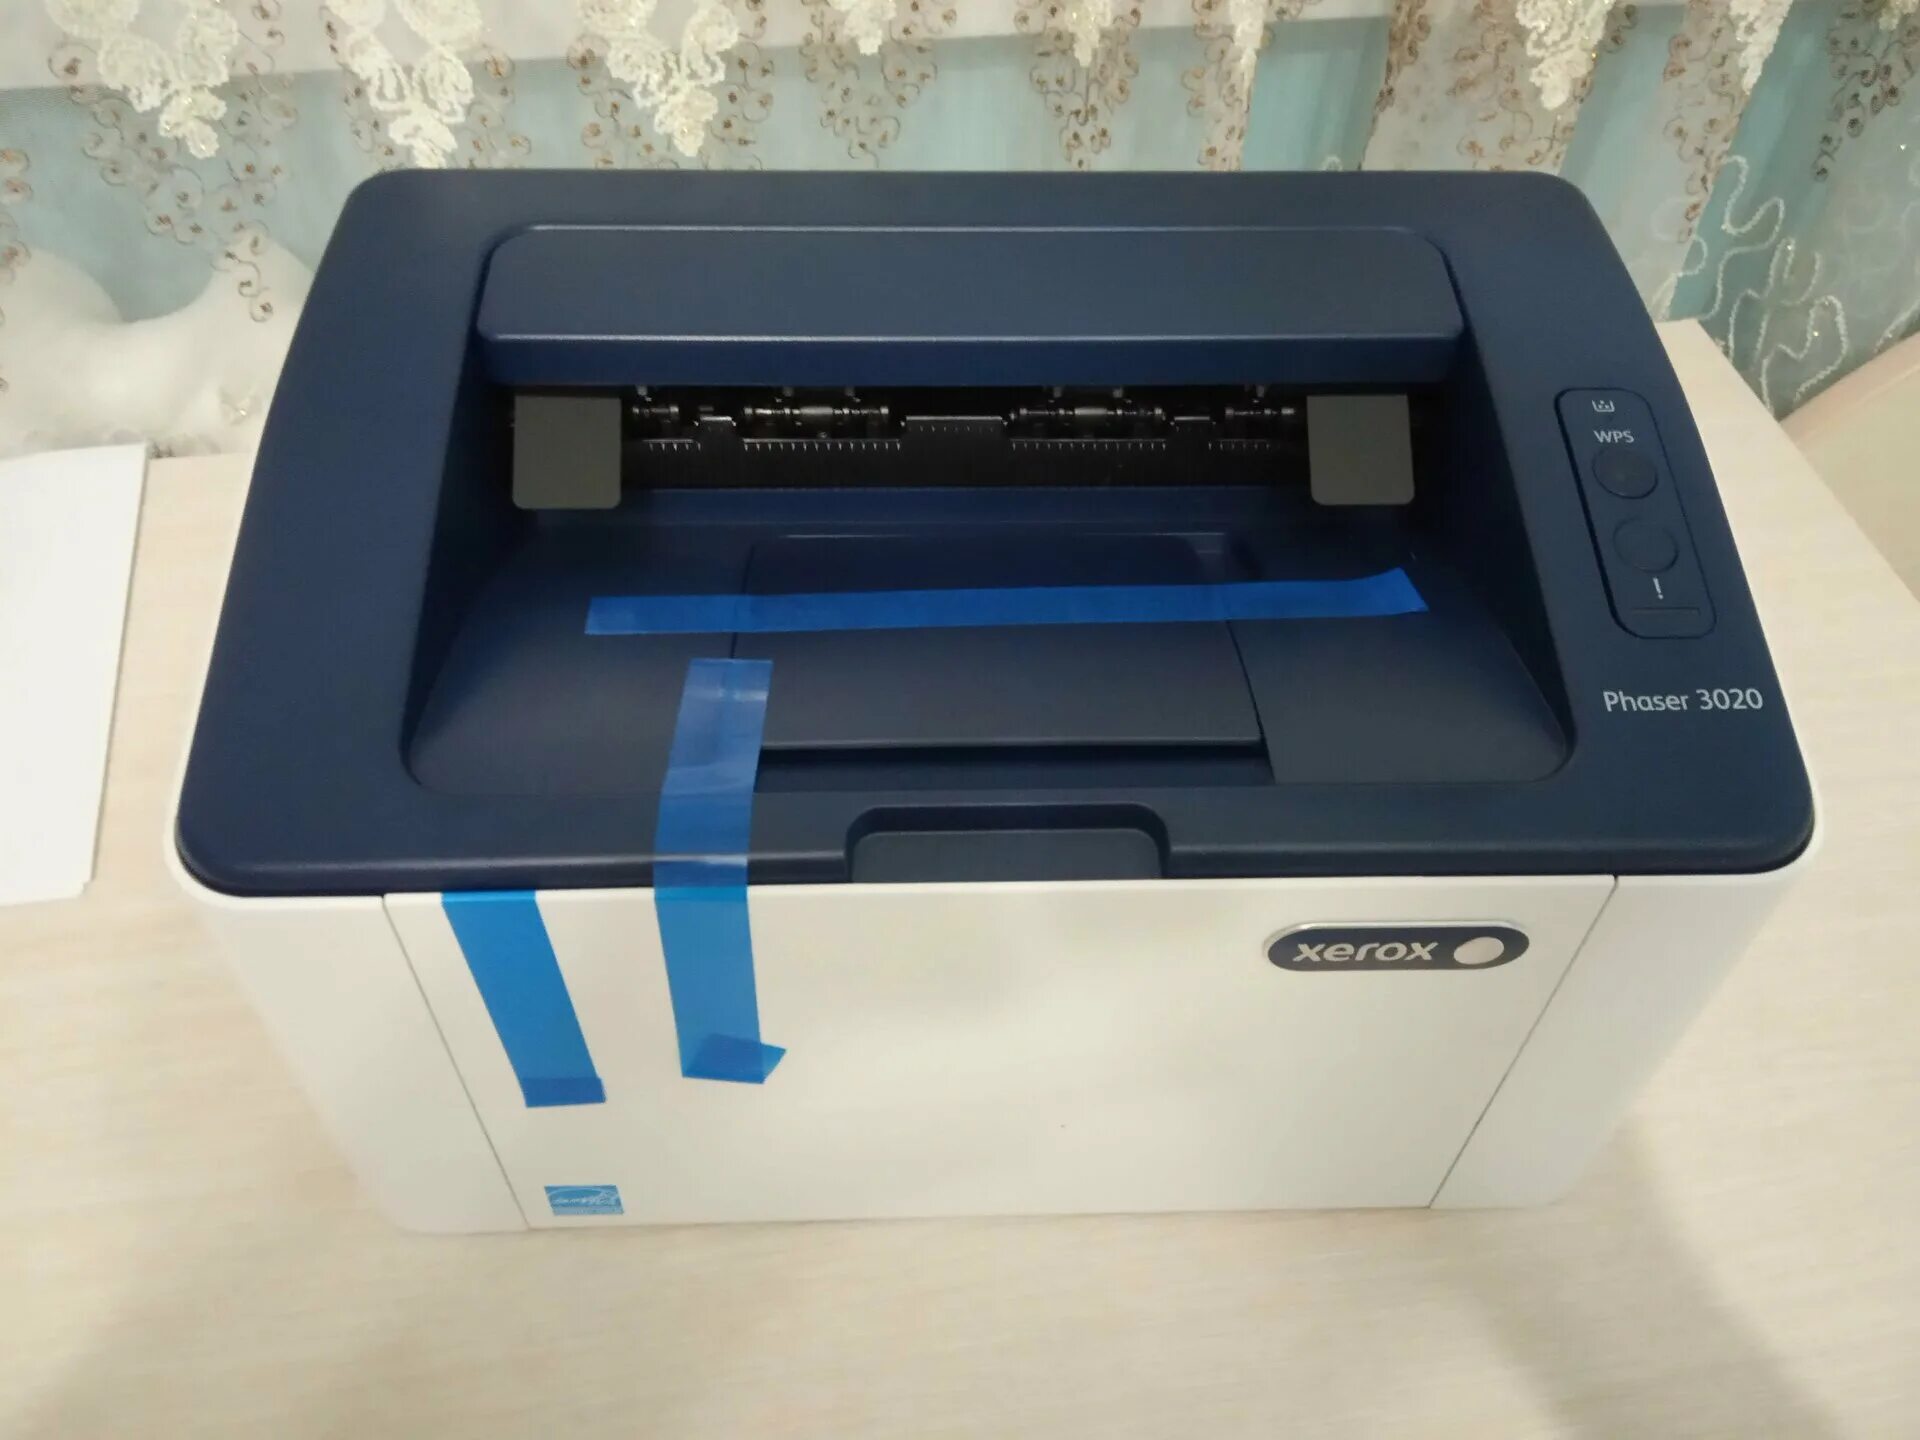 Купить принтер xerox phaser 3020. Xerox Phaser 3020. Xerox Phaser 3020bi. Принтер лазерный Xerox Phaser 3020bi. Xerox Phaser 3020bi, ч/б, a4.